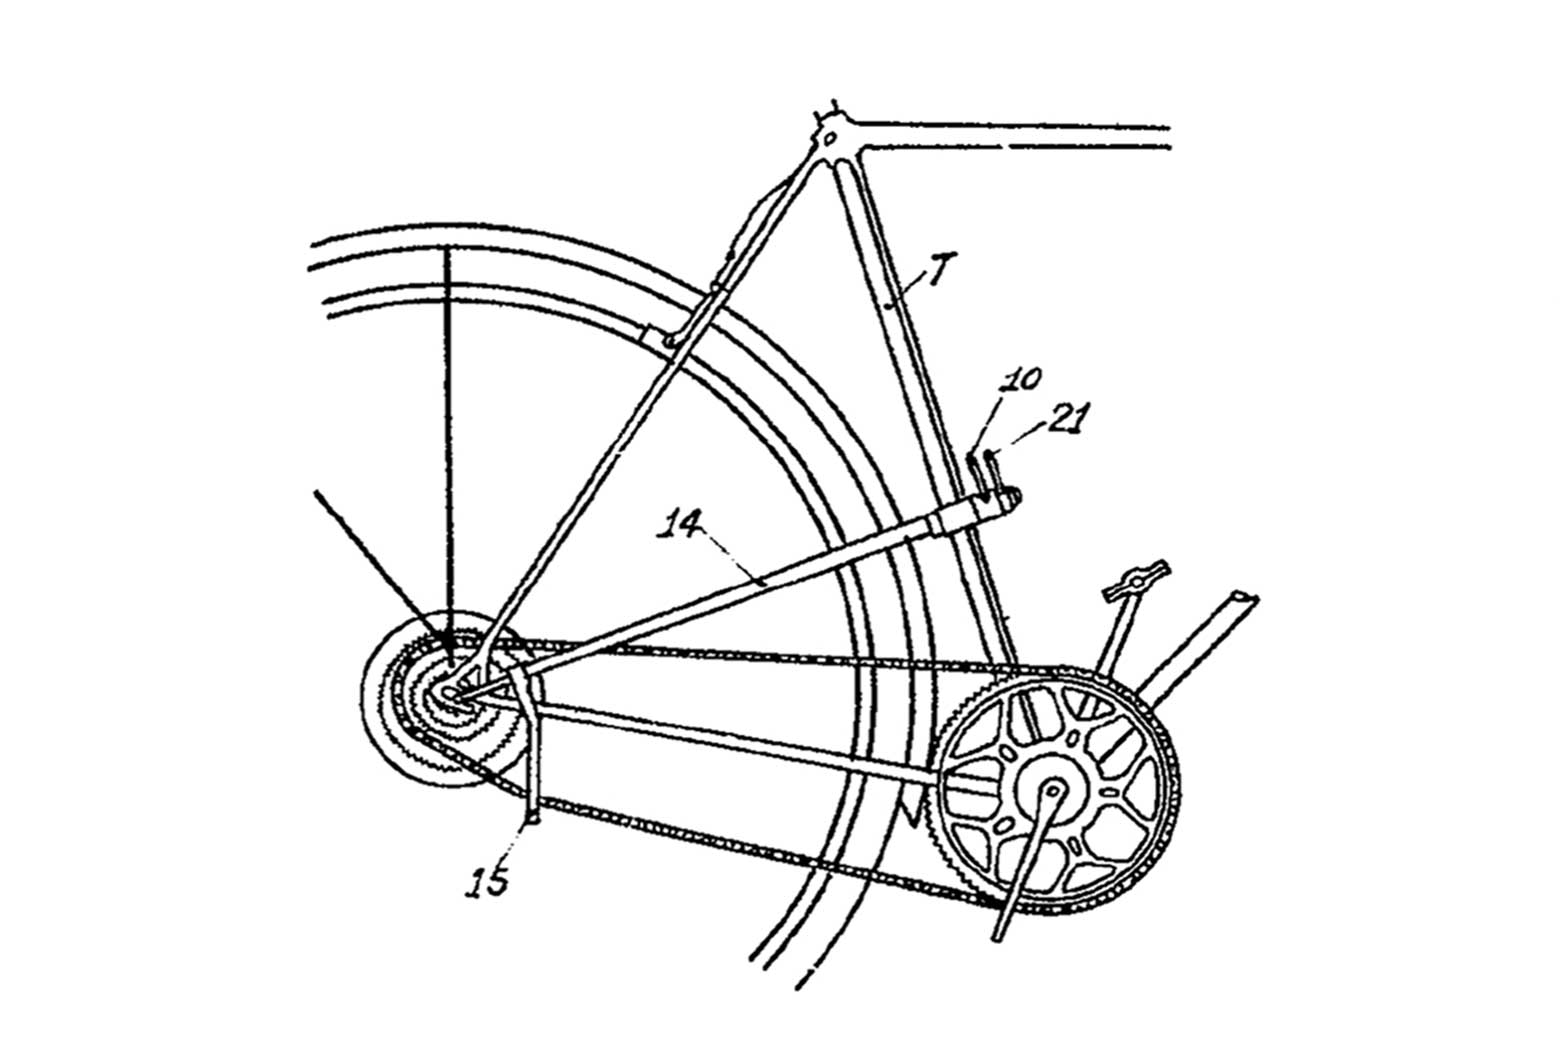 UK Patent 620,708 - Boeris main image